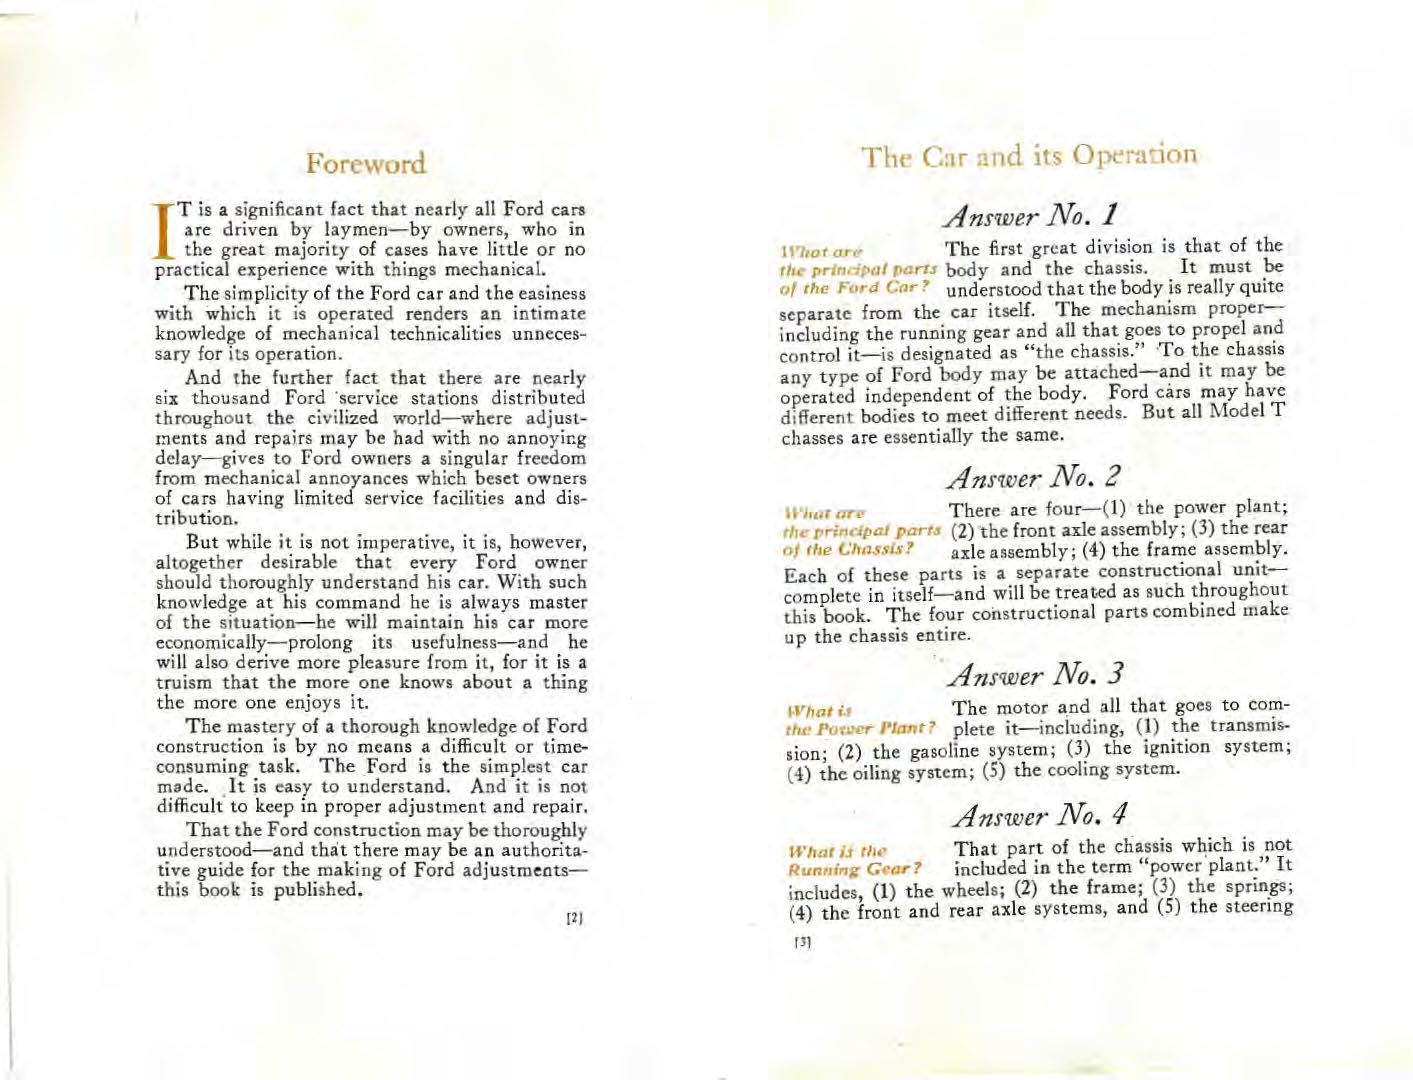 n_1915 Ford Owners Manual-02-03.jpg